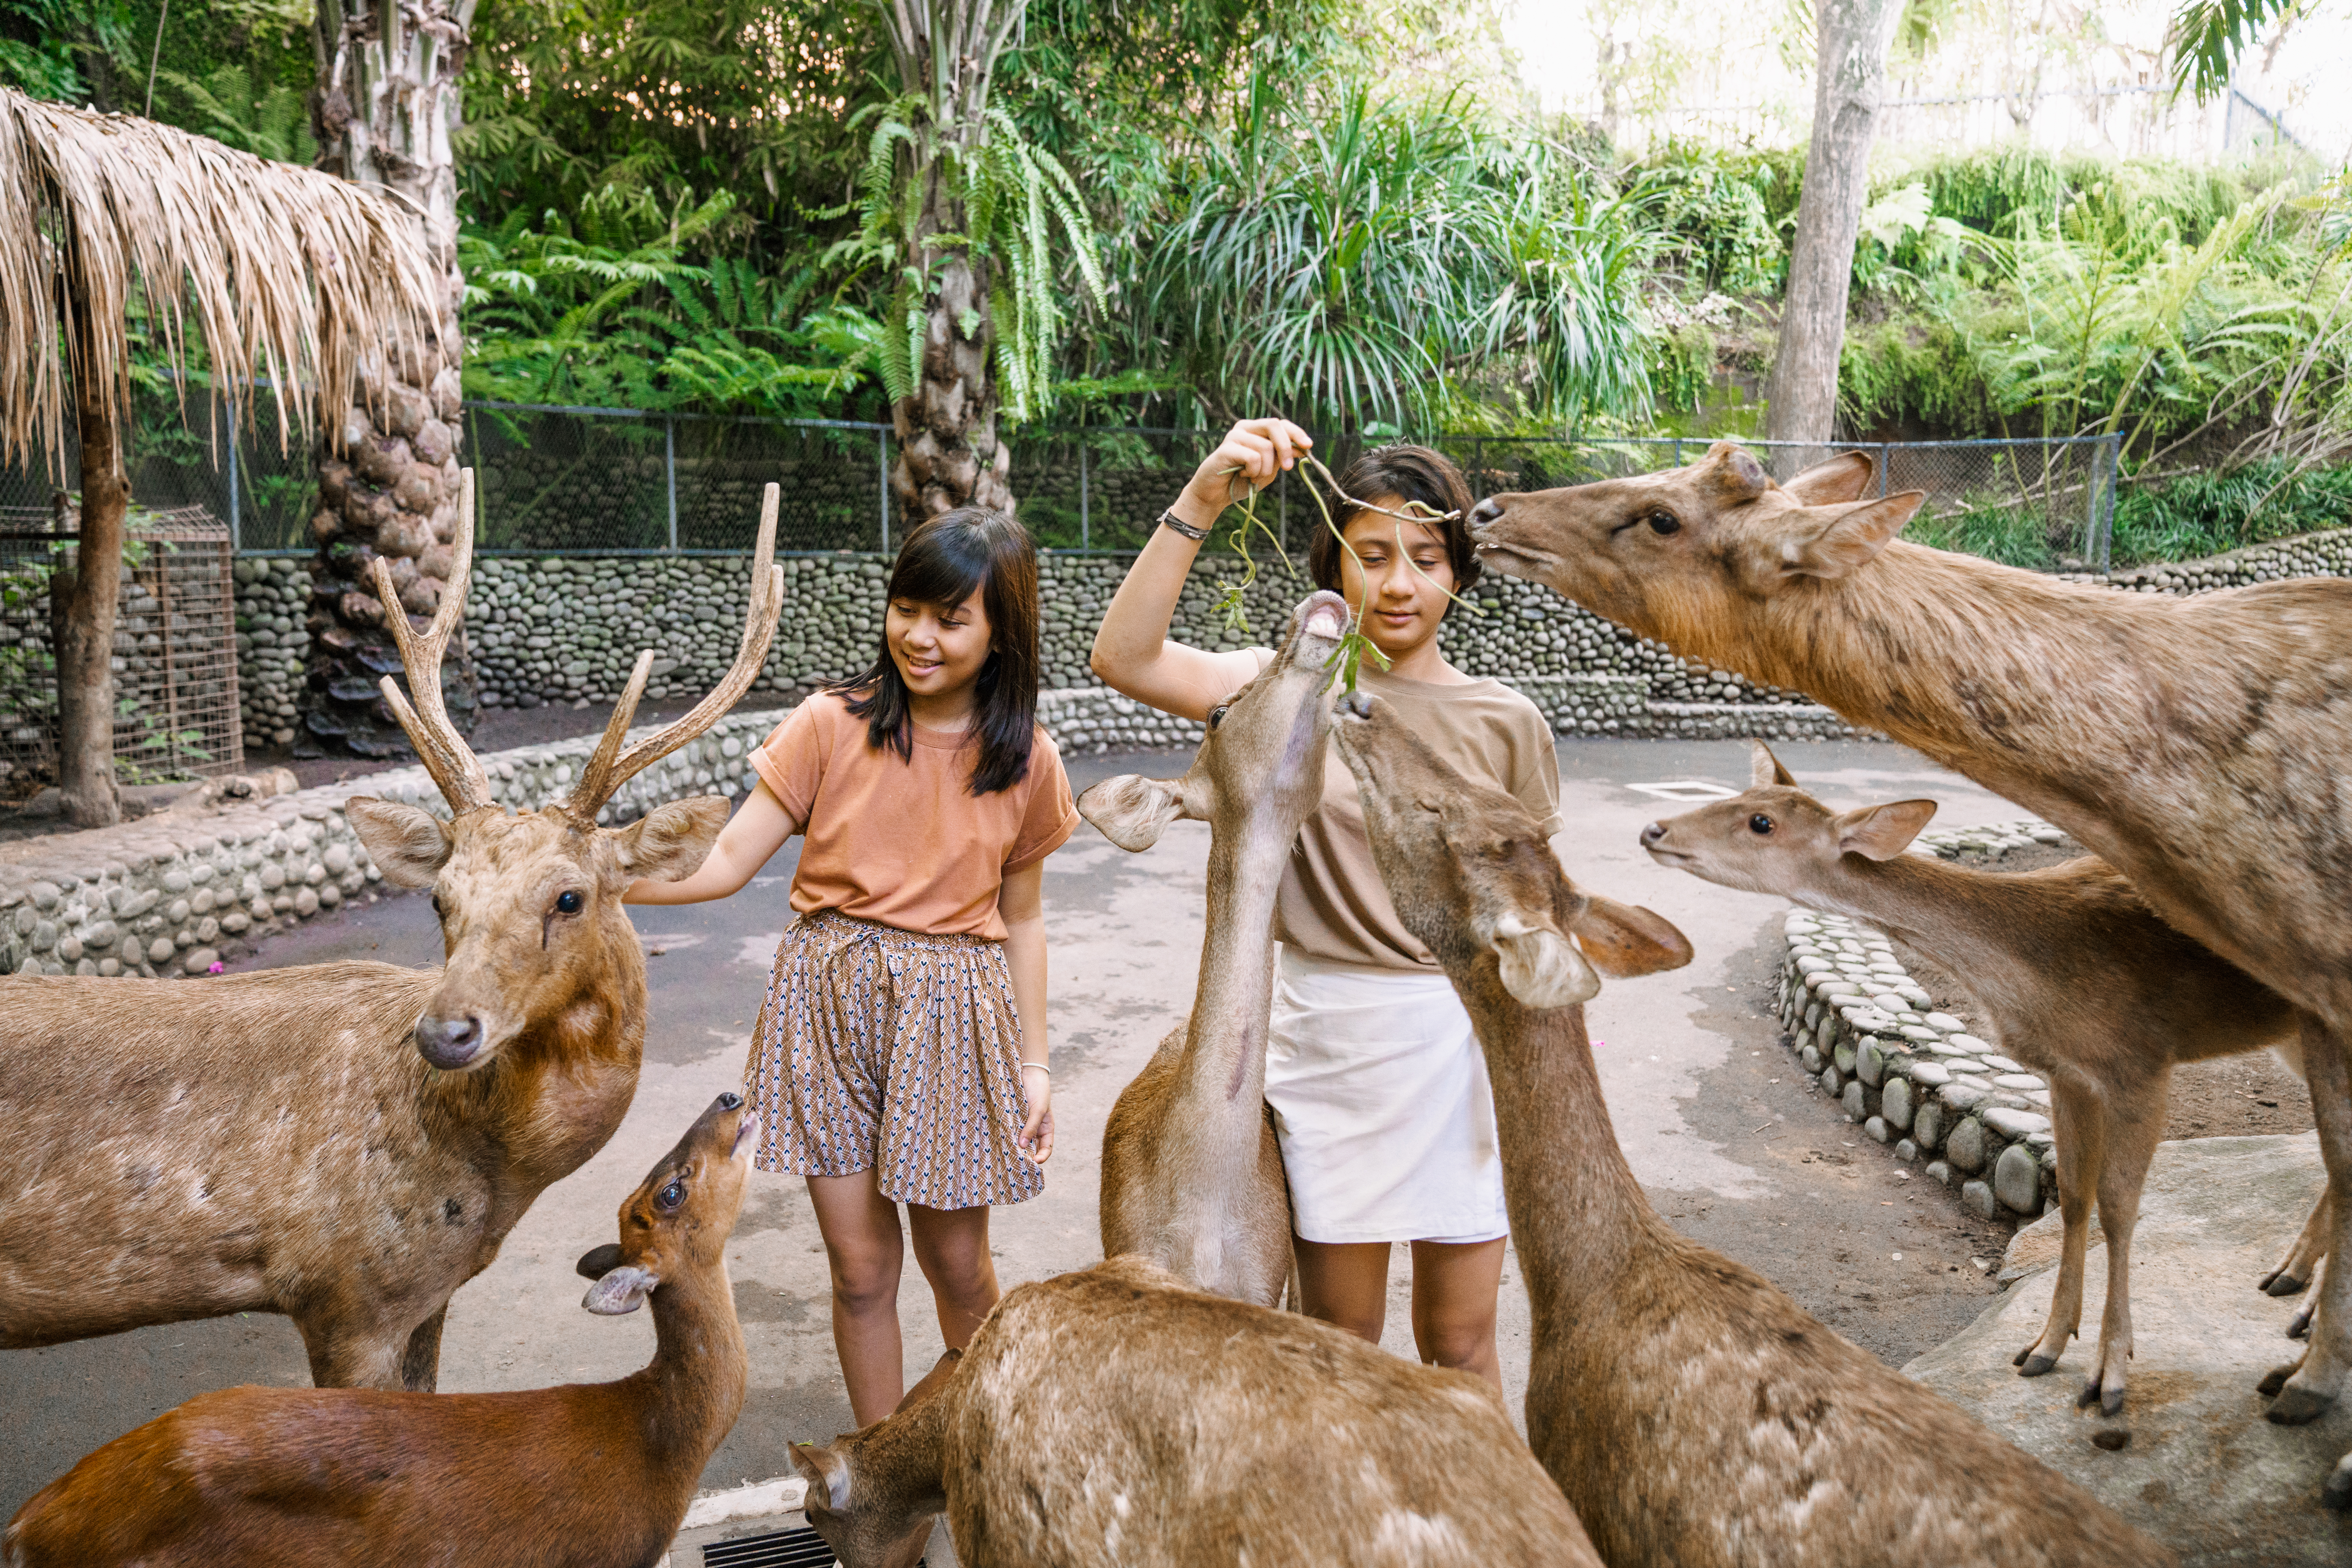 Bali Zoo Deer Feeding.jpg (23.28 MB)